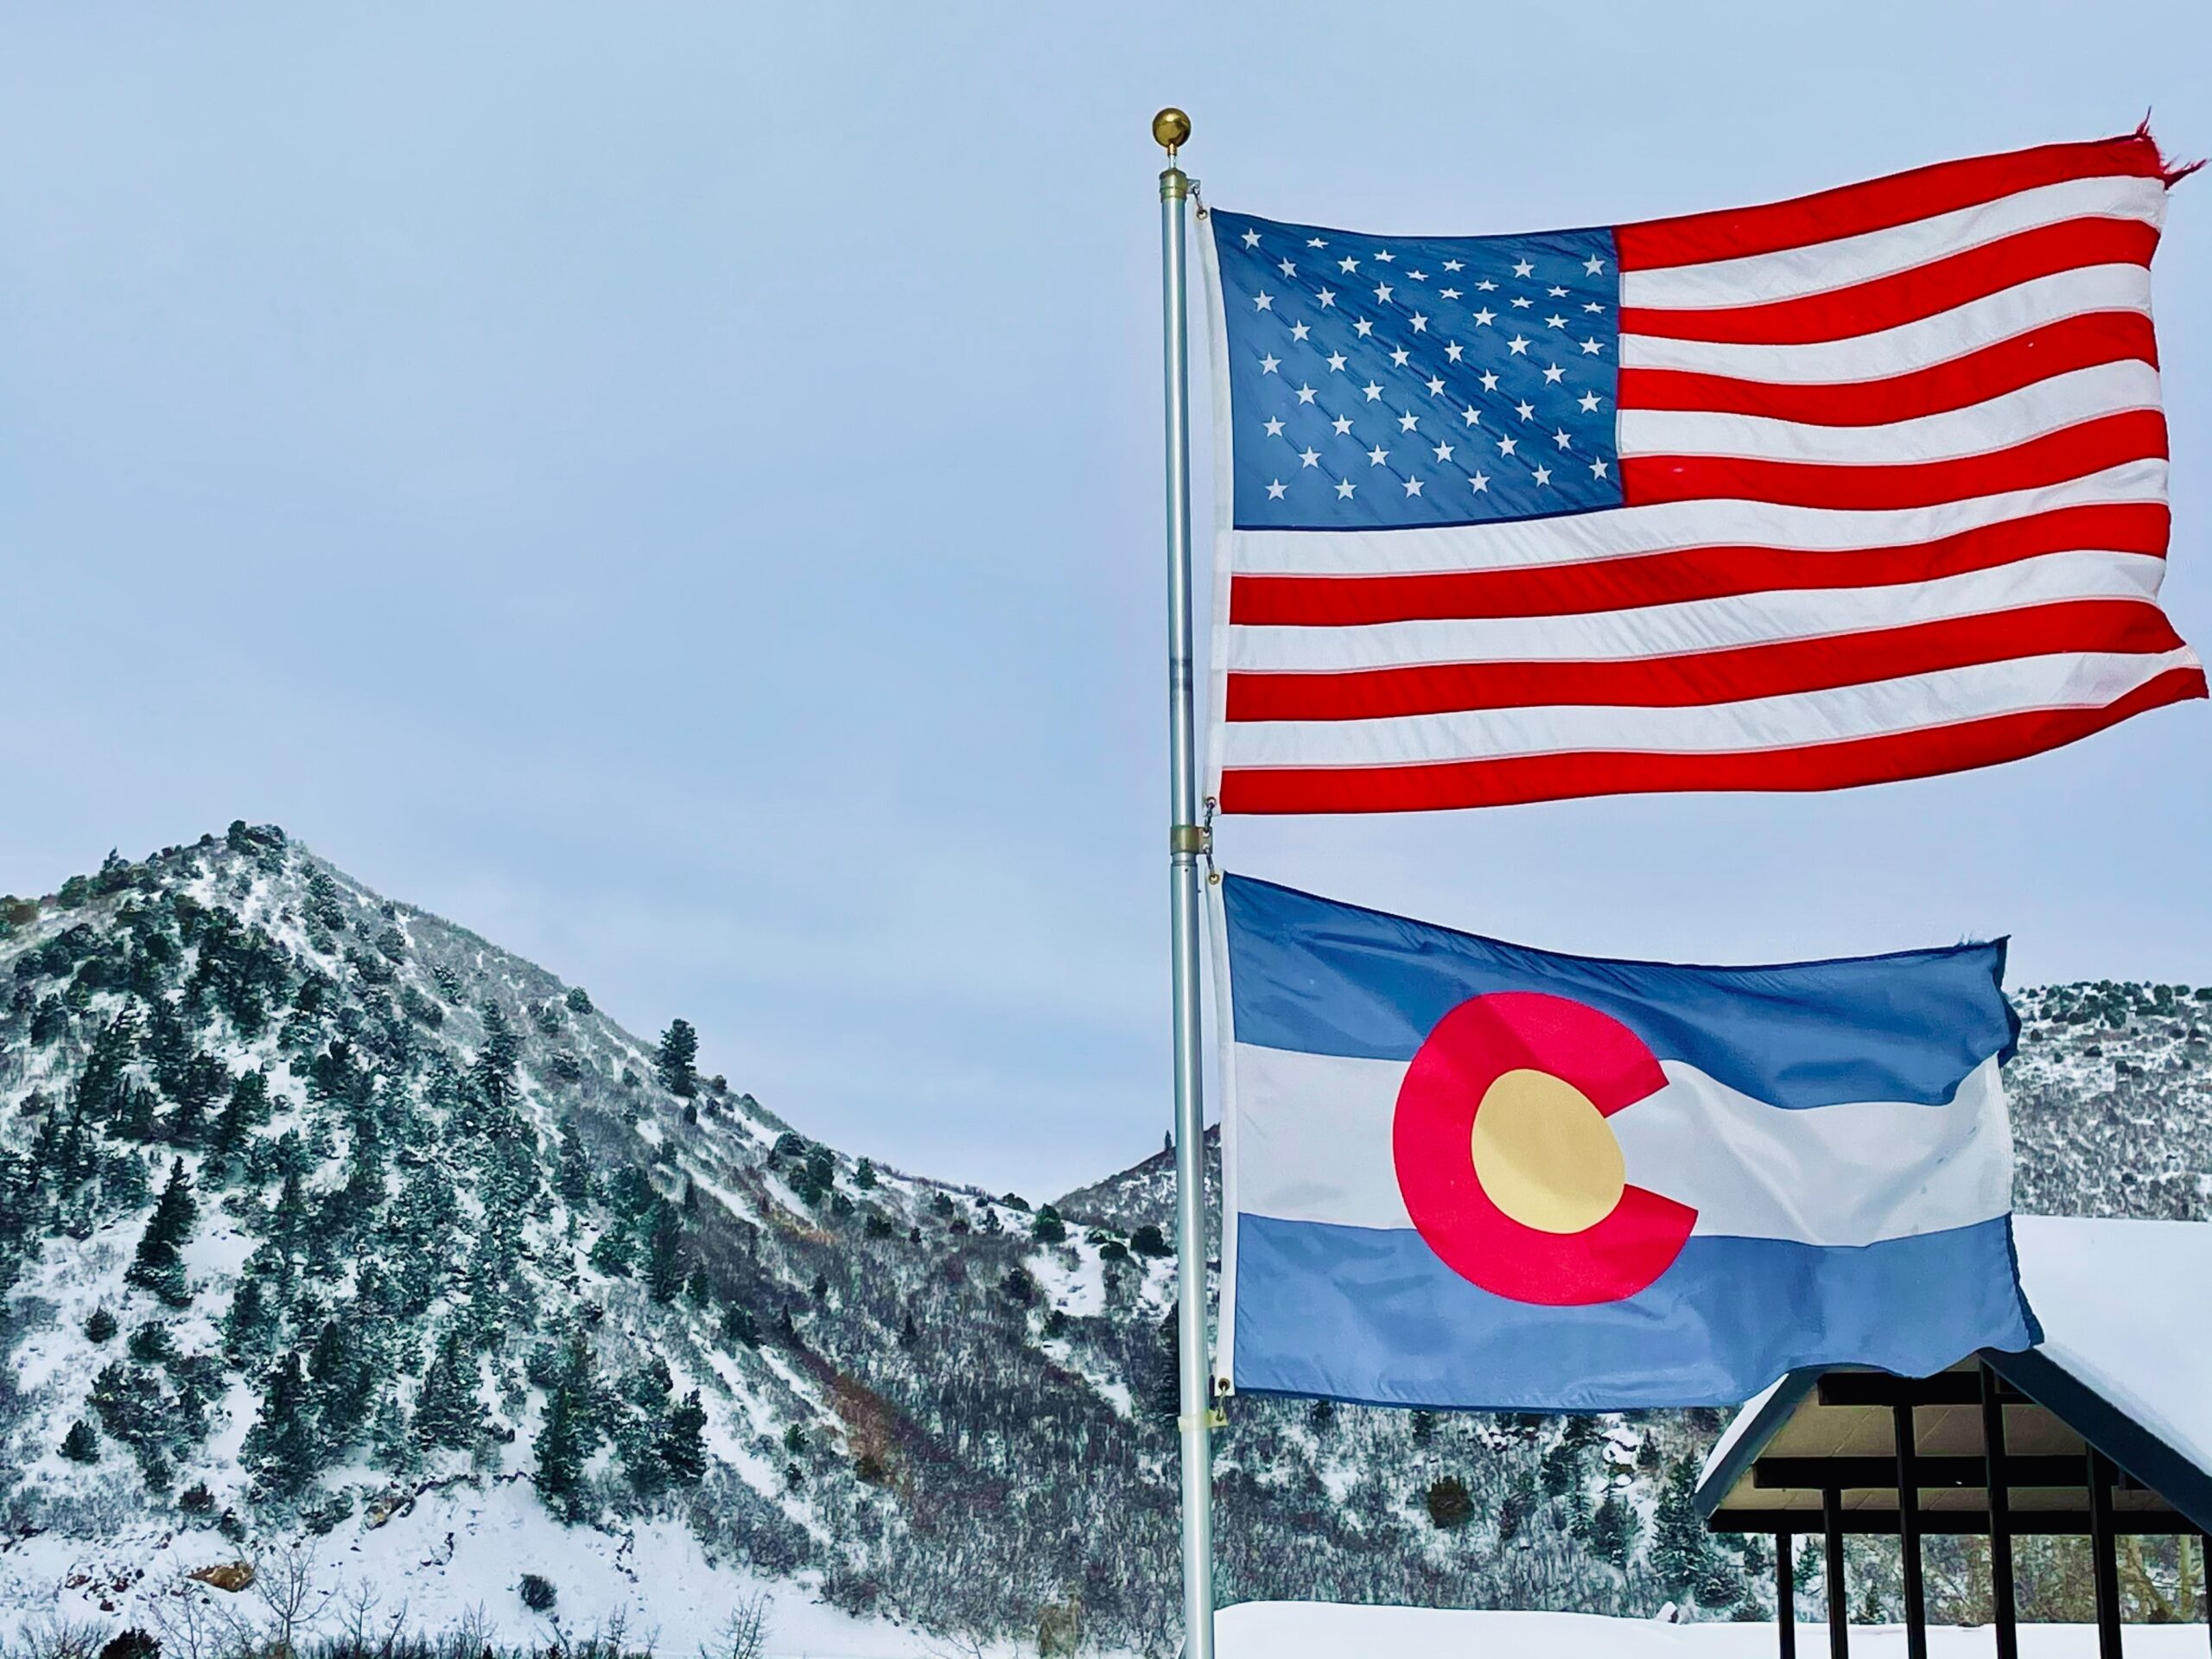 U.S. flag and Colorado flag on a pole against a snowy mountain backdrop